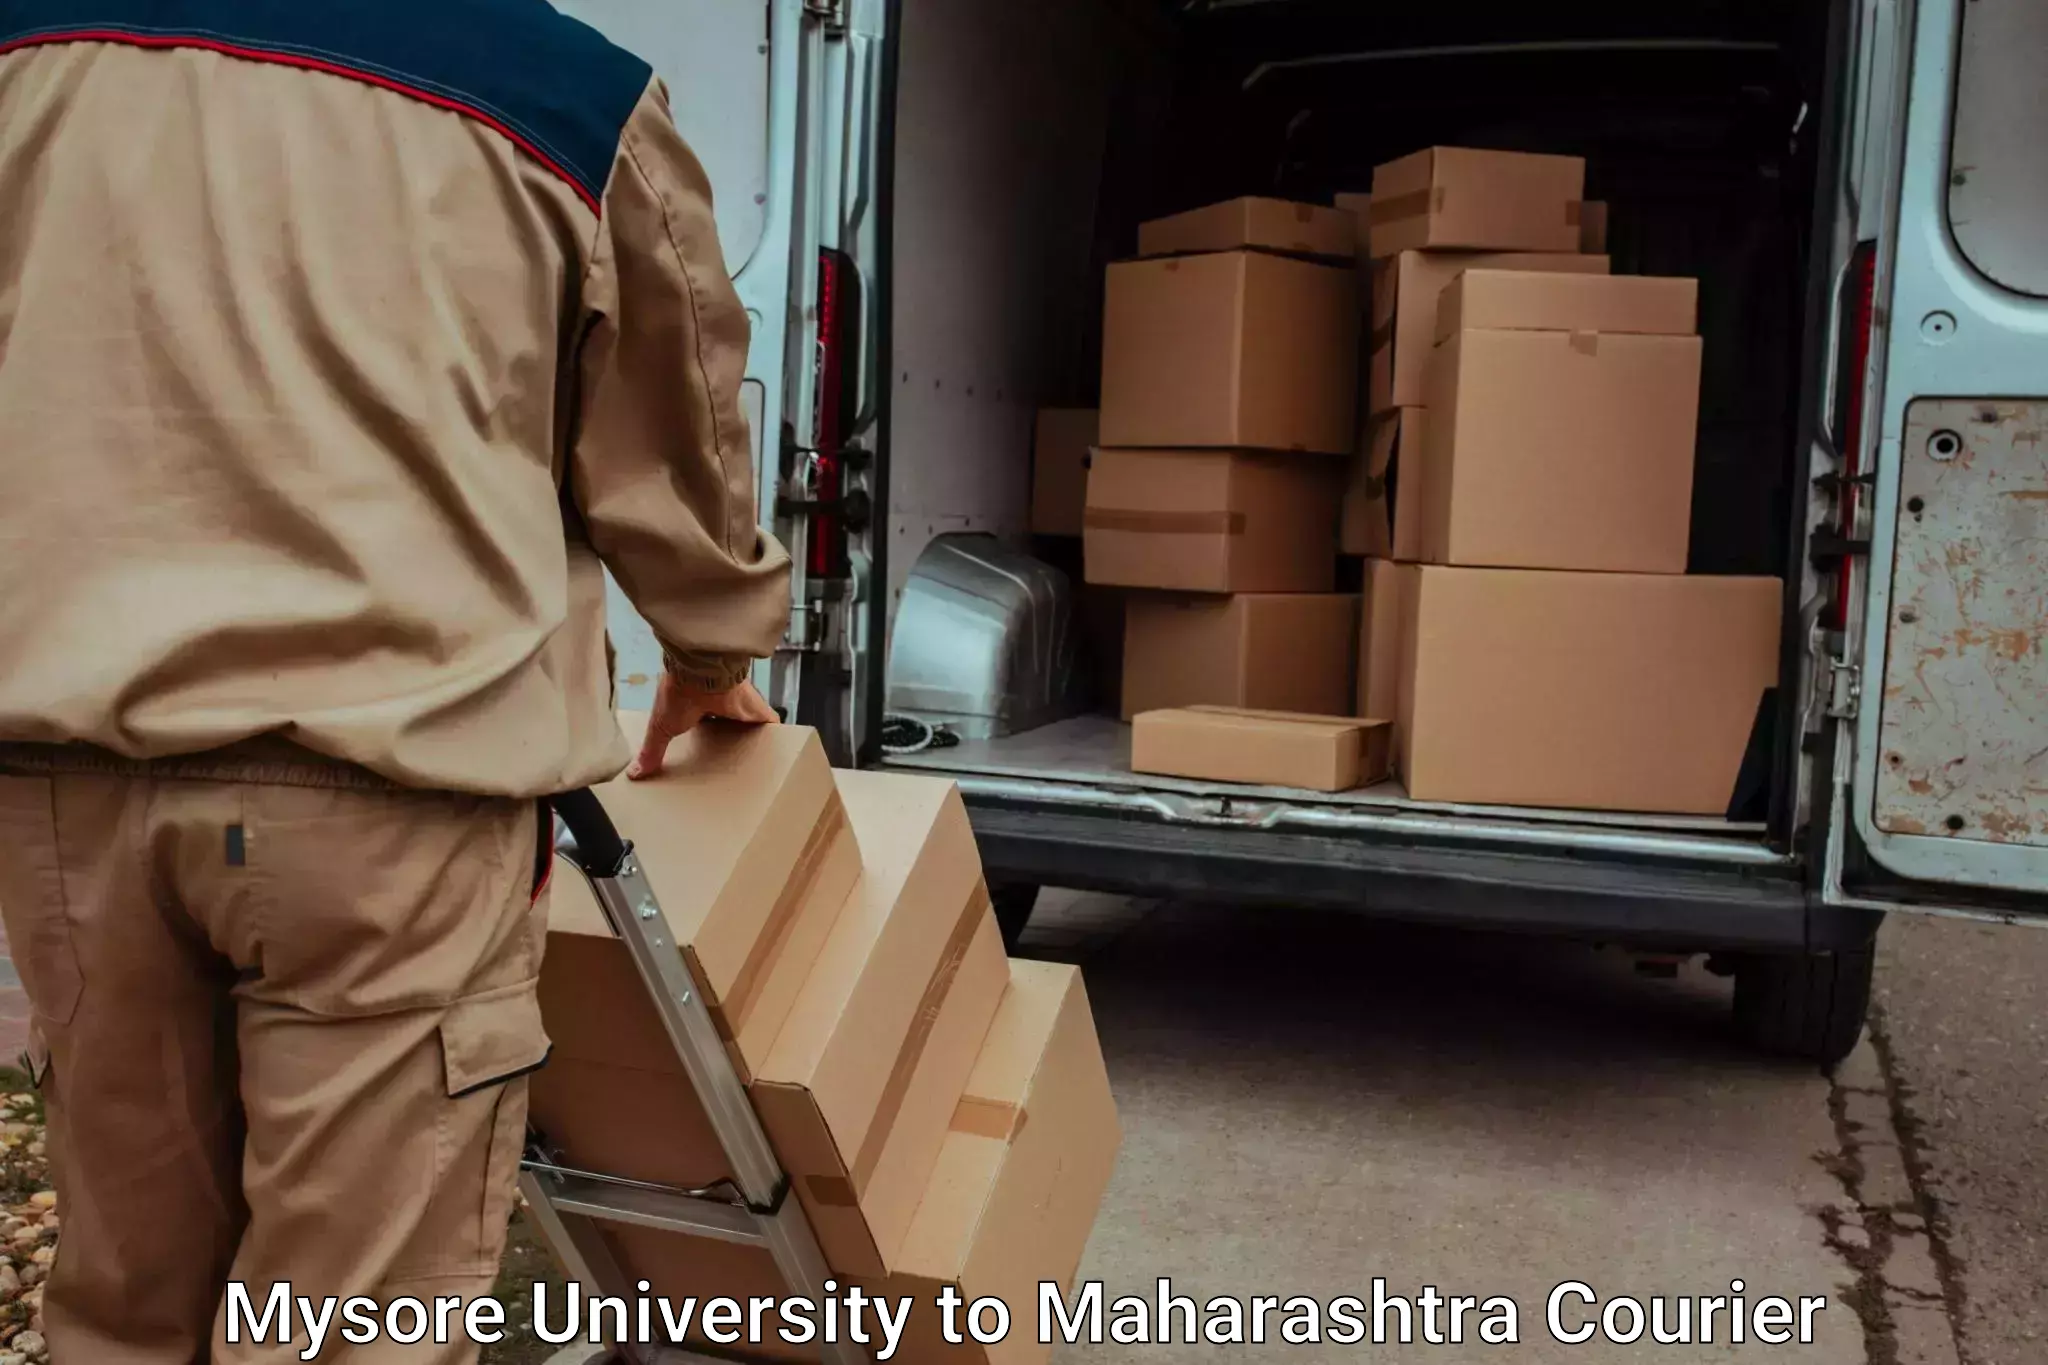 Nationwide household movers Mysore University to Koregaon